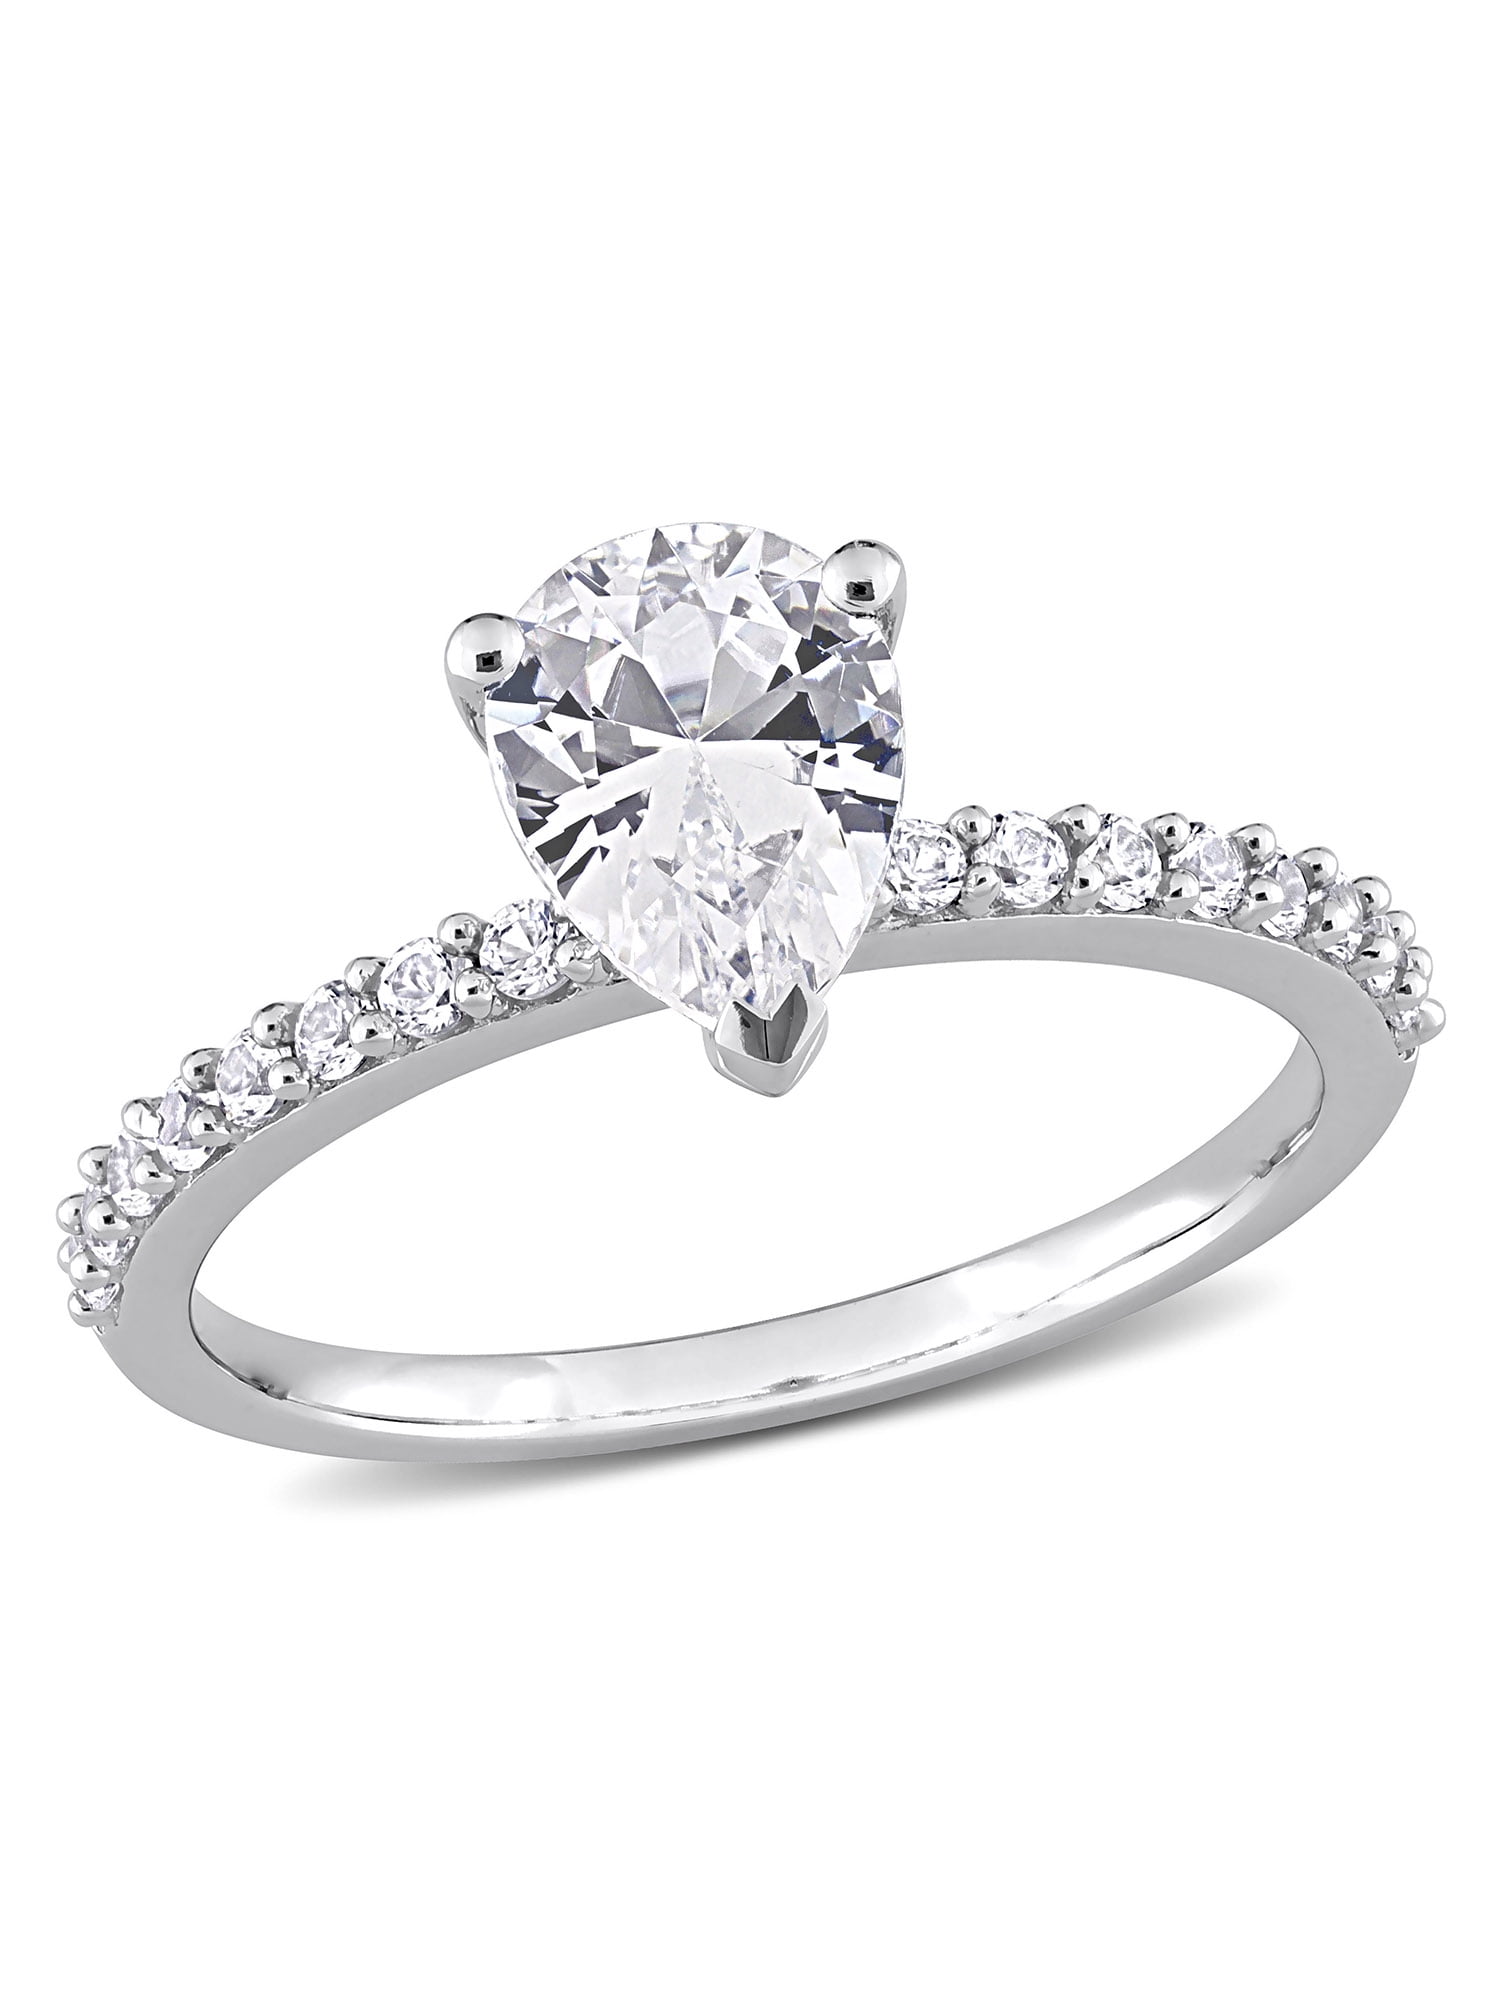 Engagement Wedding Ring 14K White Gold 2.12 Ct Princess Cut Diamond 